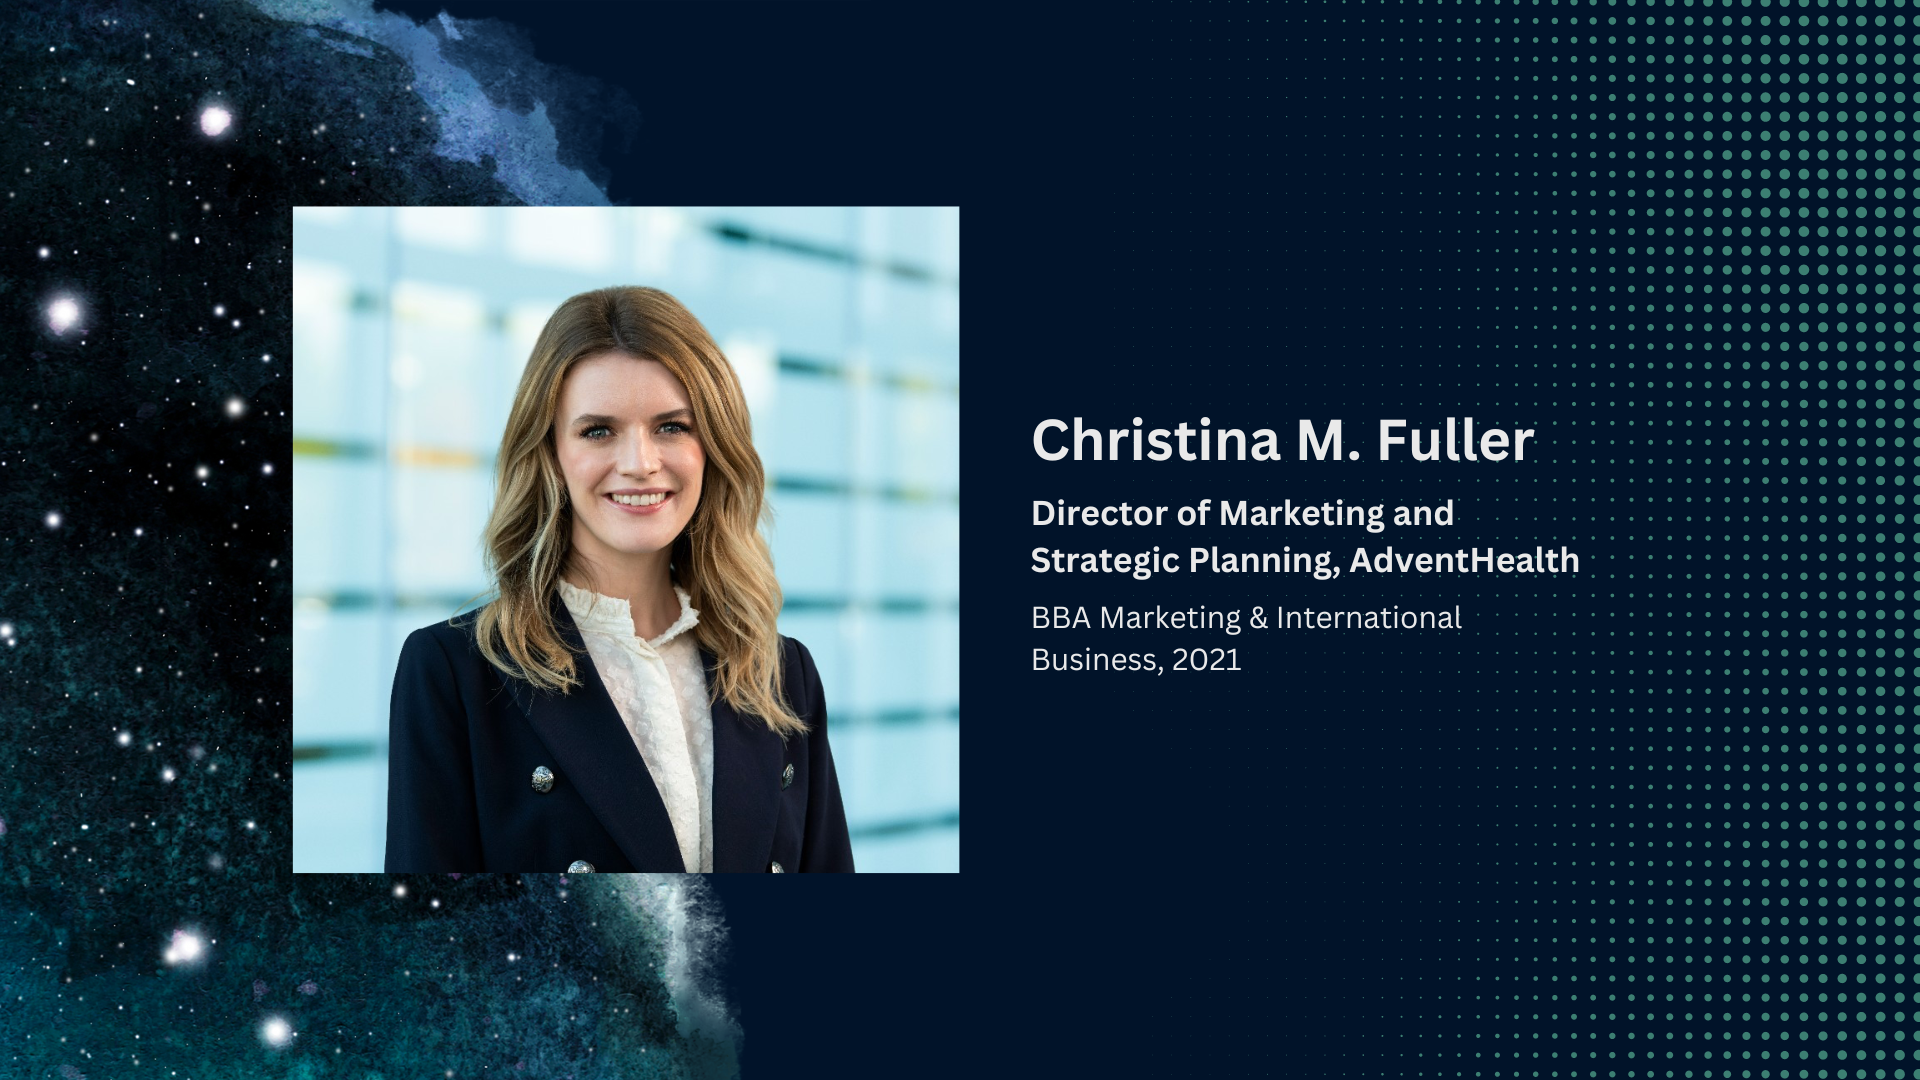 Inside AdventHealth: Christina M. Fuller’s Journey in Marketing & Strategic Planning